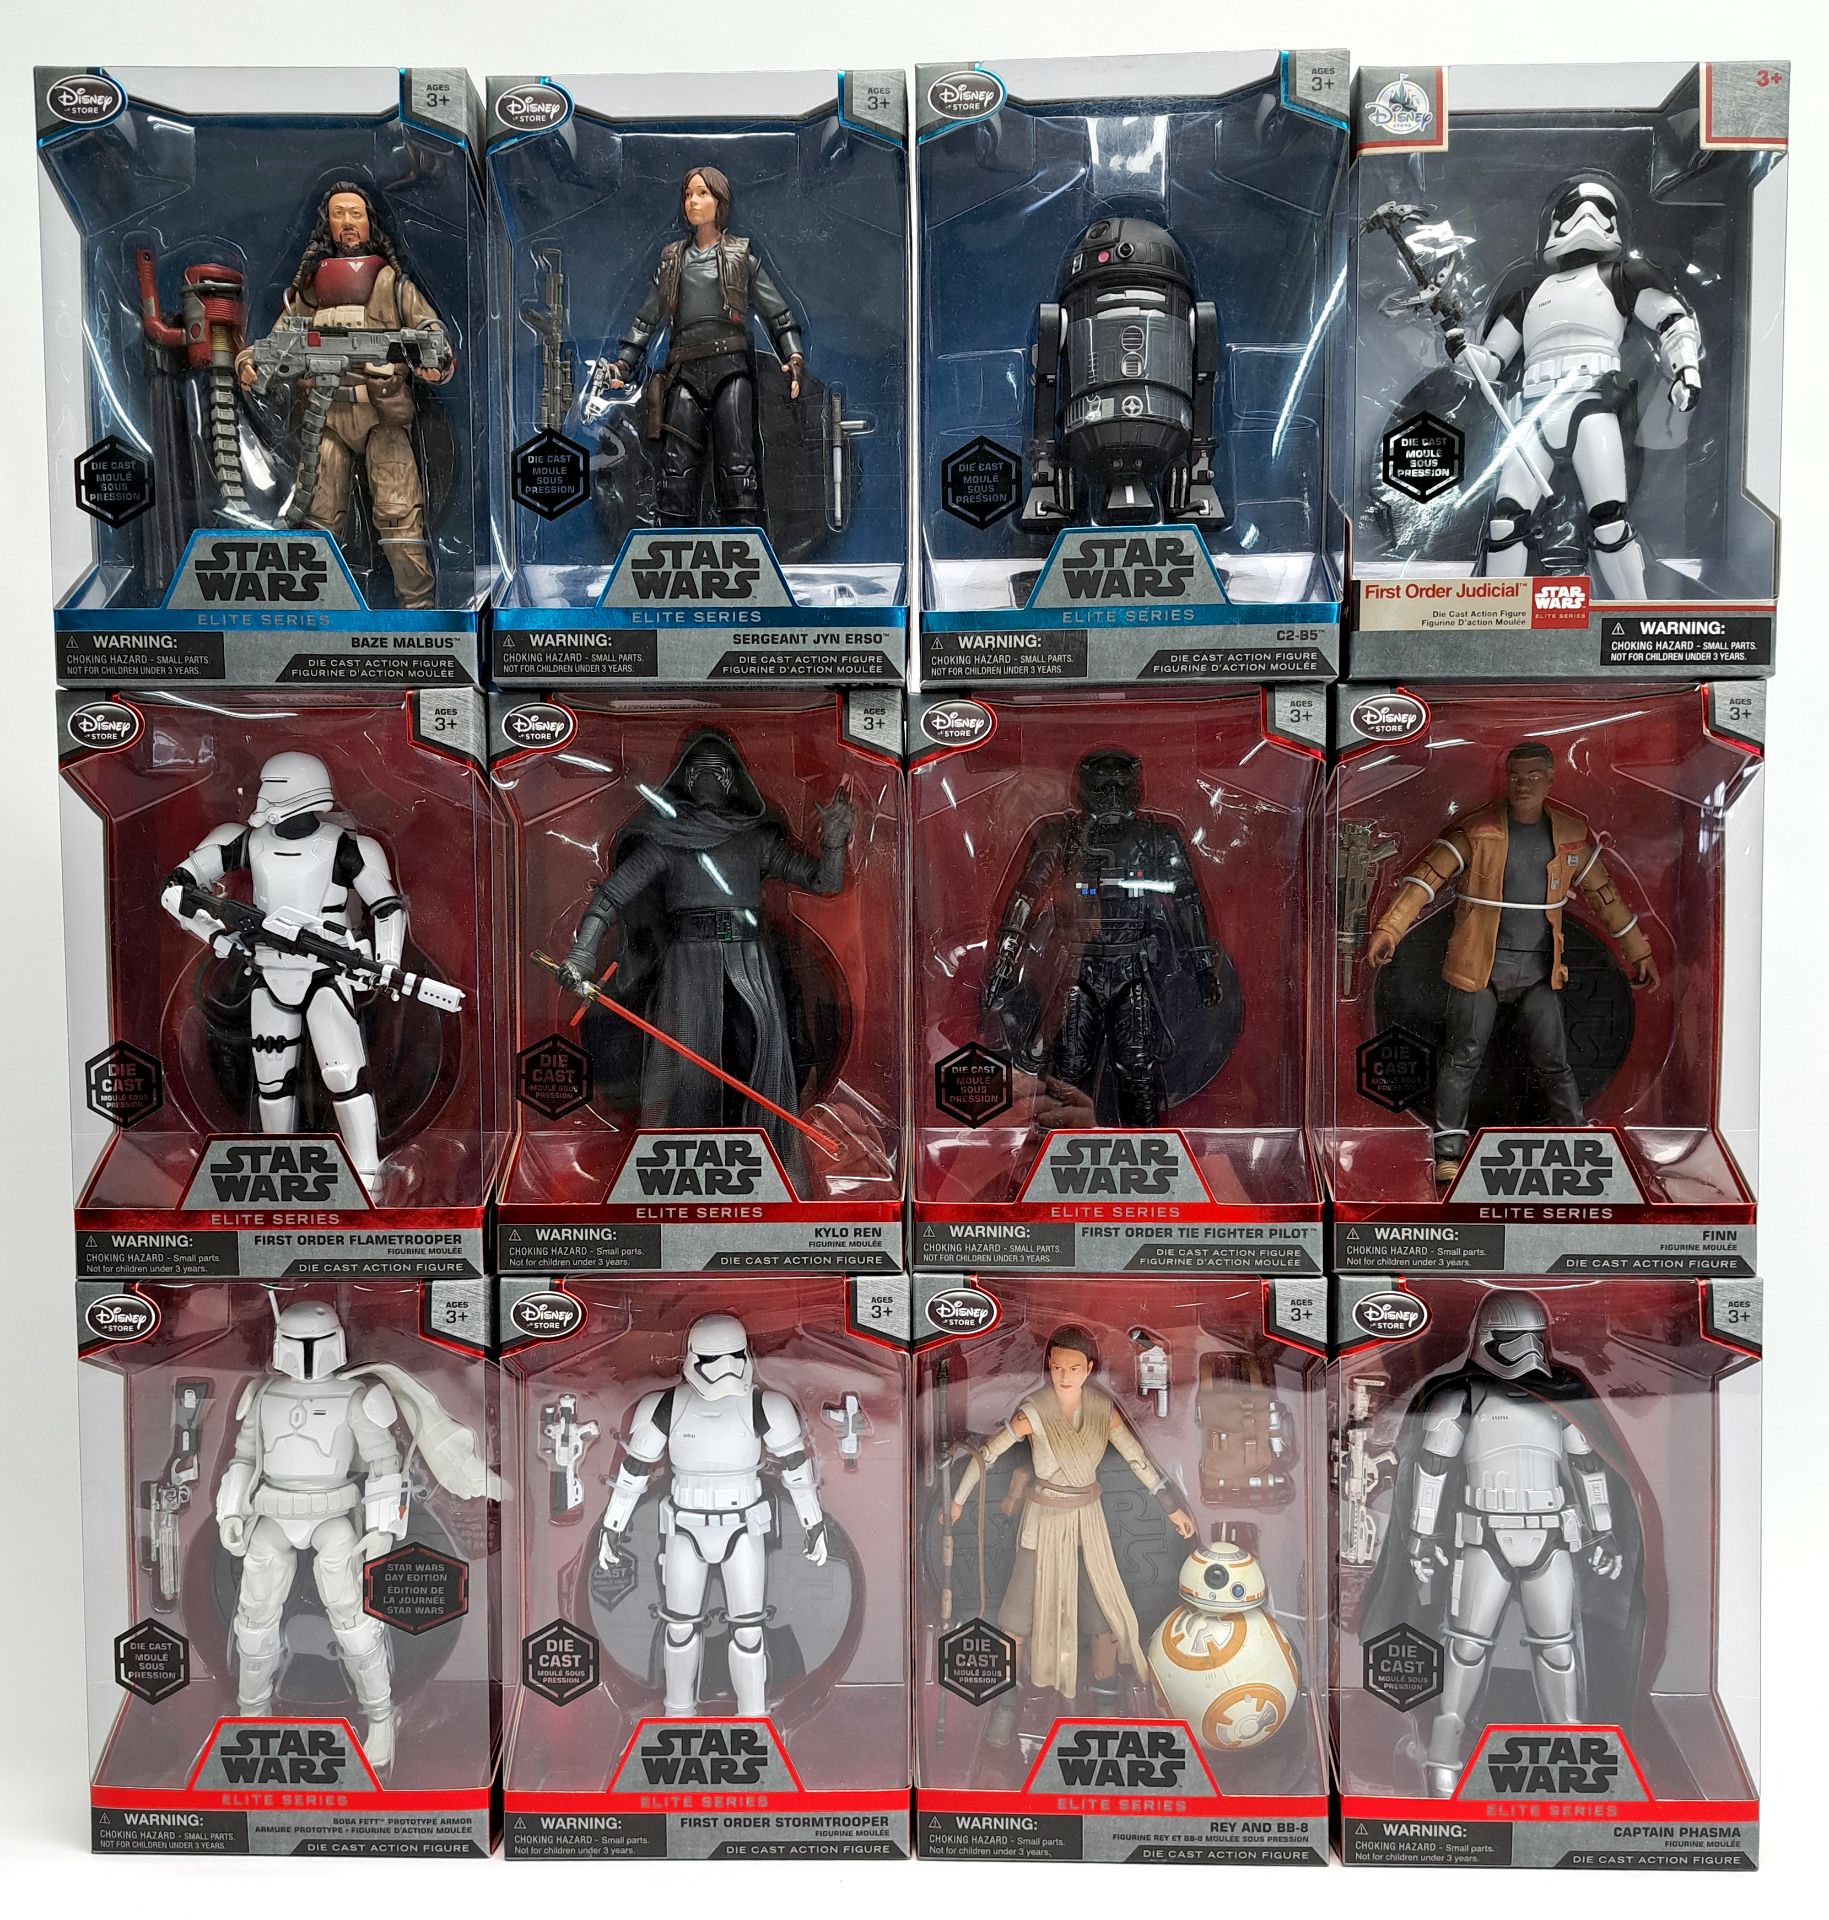 Disney Store Star Wars Die-cast Elite series mixed lot of saga figurines Near Mint to Mint